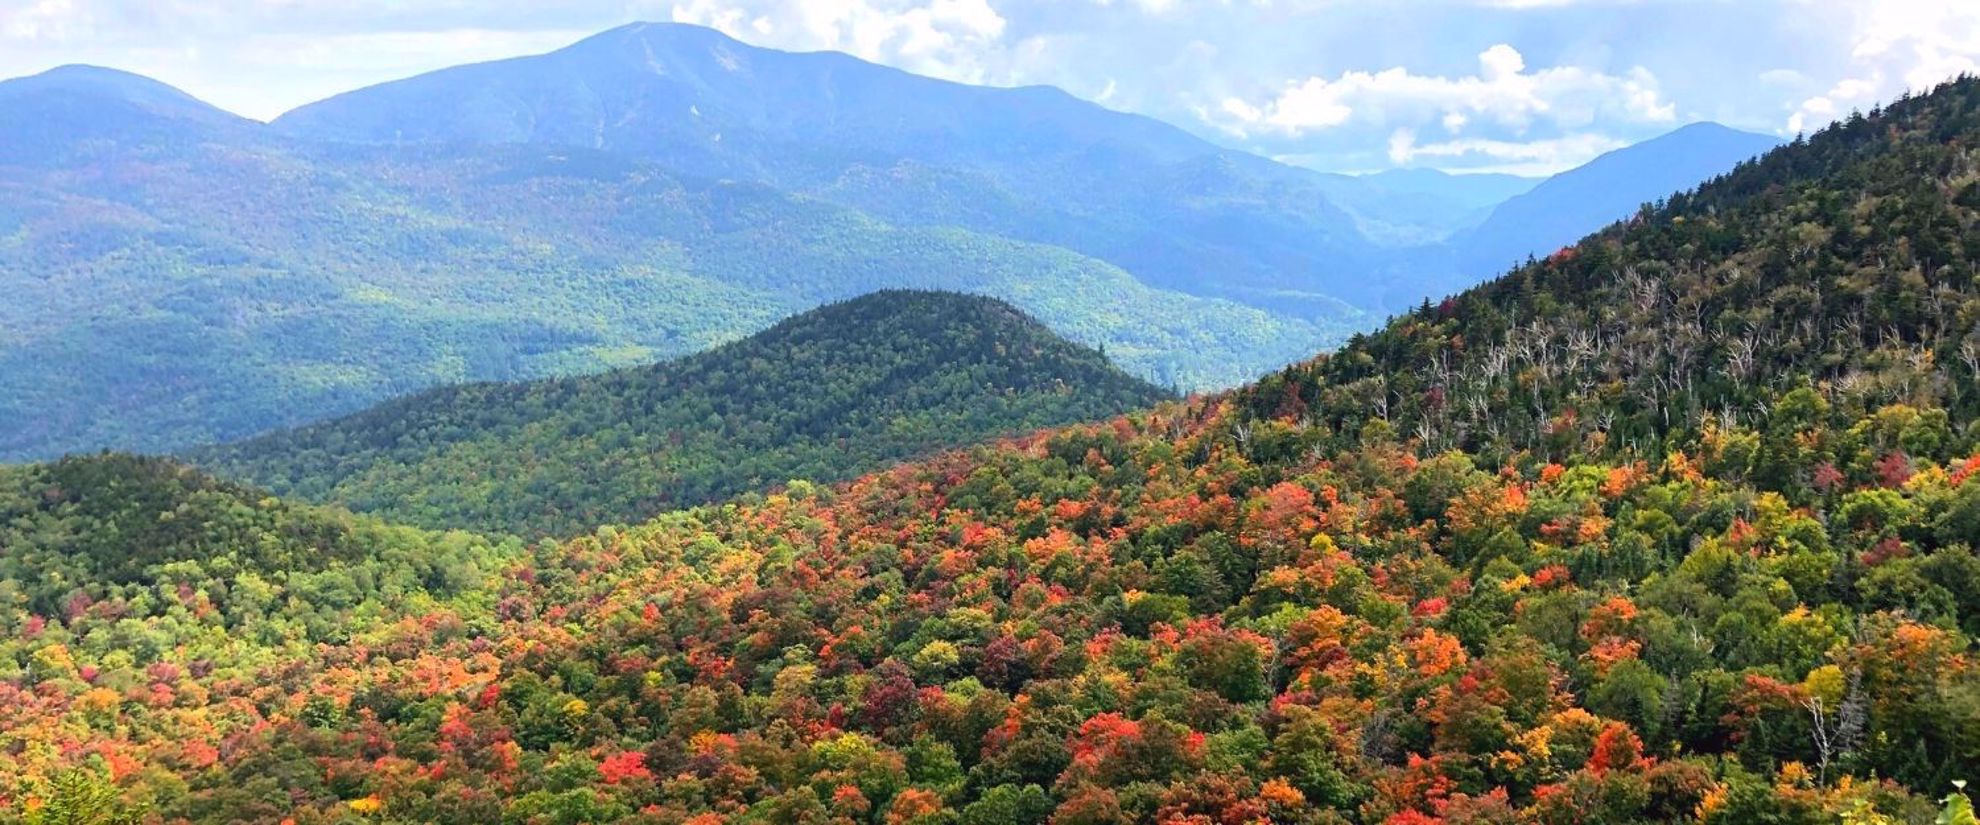 fall views of the Adirondacks